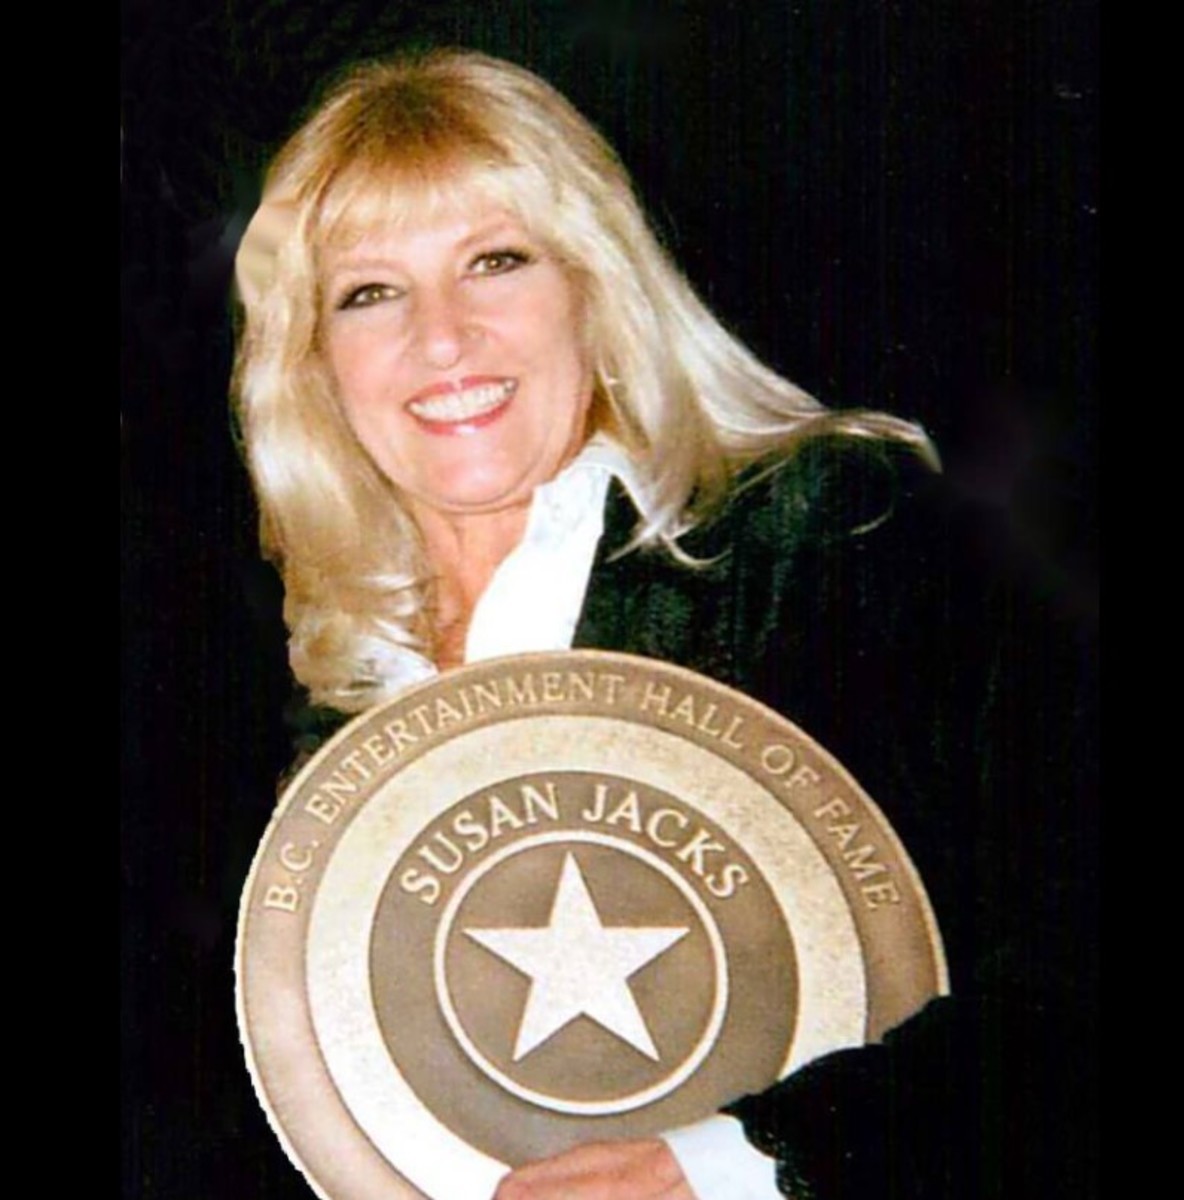 Susan Jacks BC award